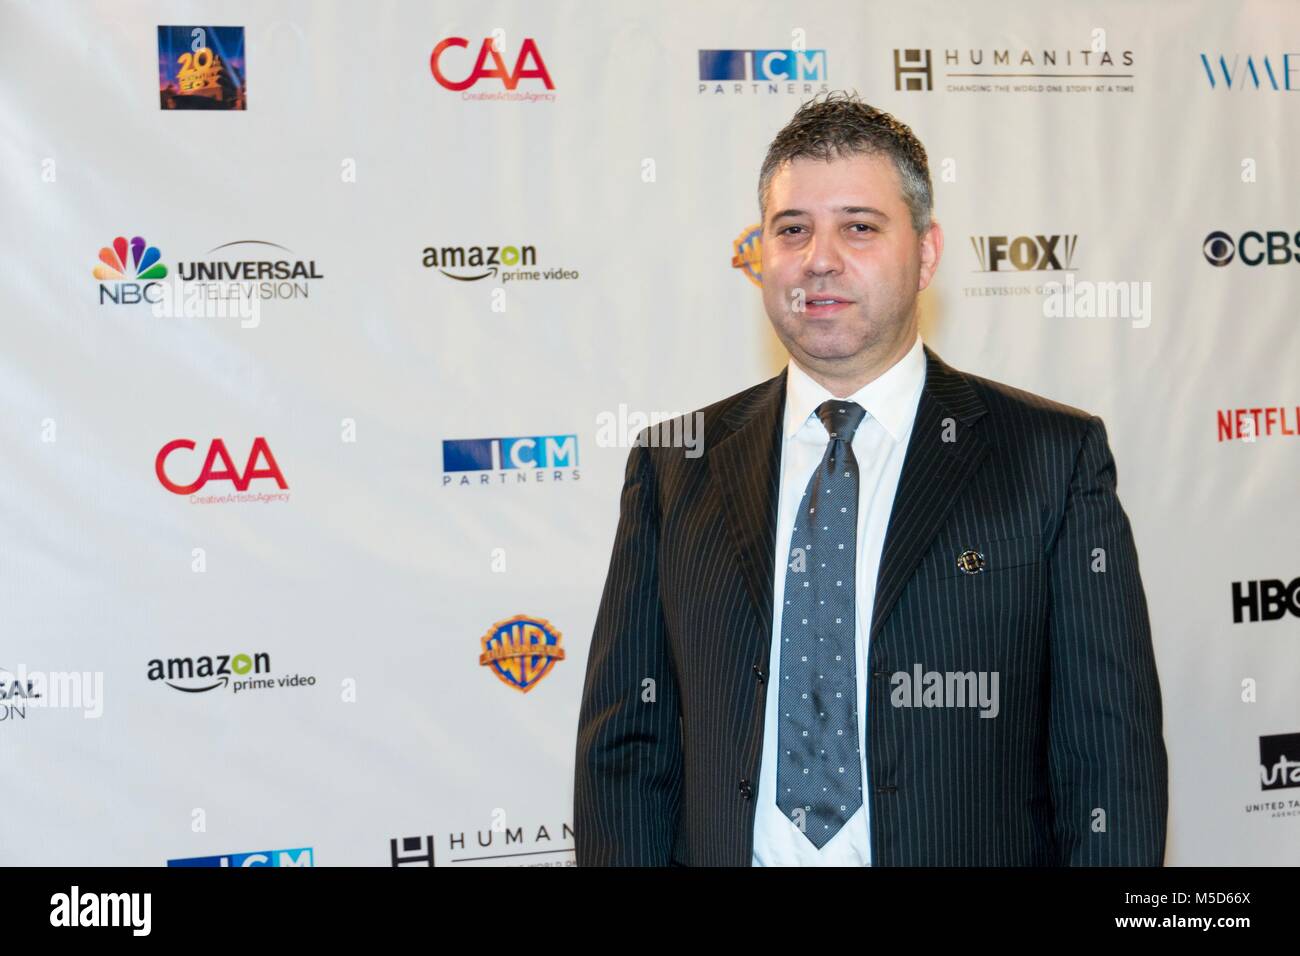 Evgeny Afineevsky at the Humanitas awards 2018 Stock Photo